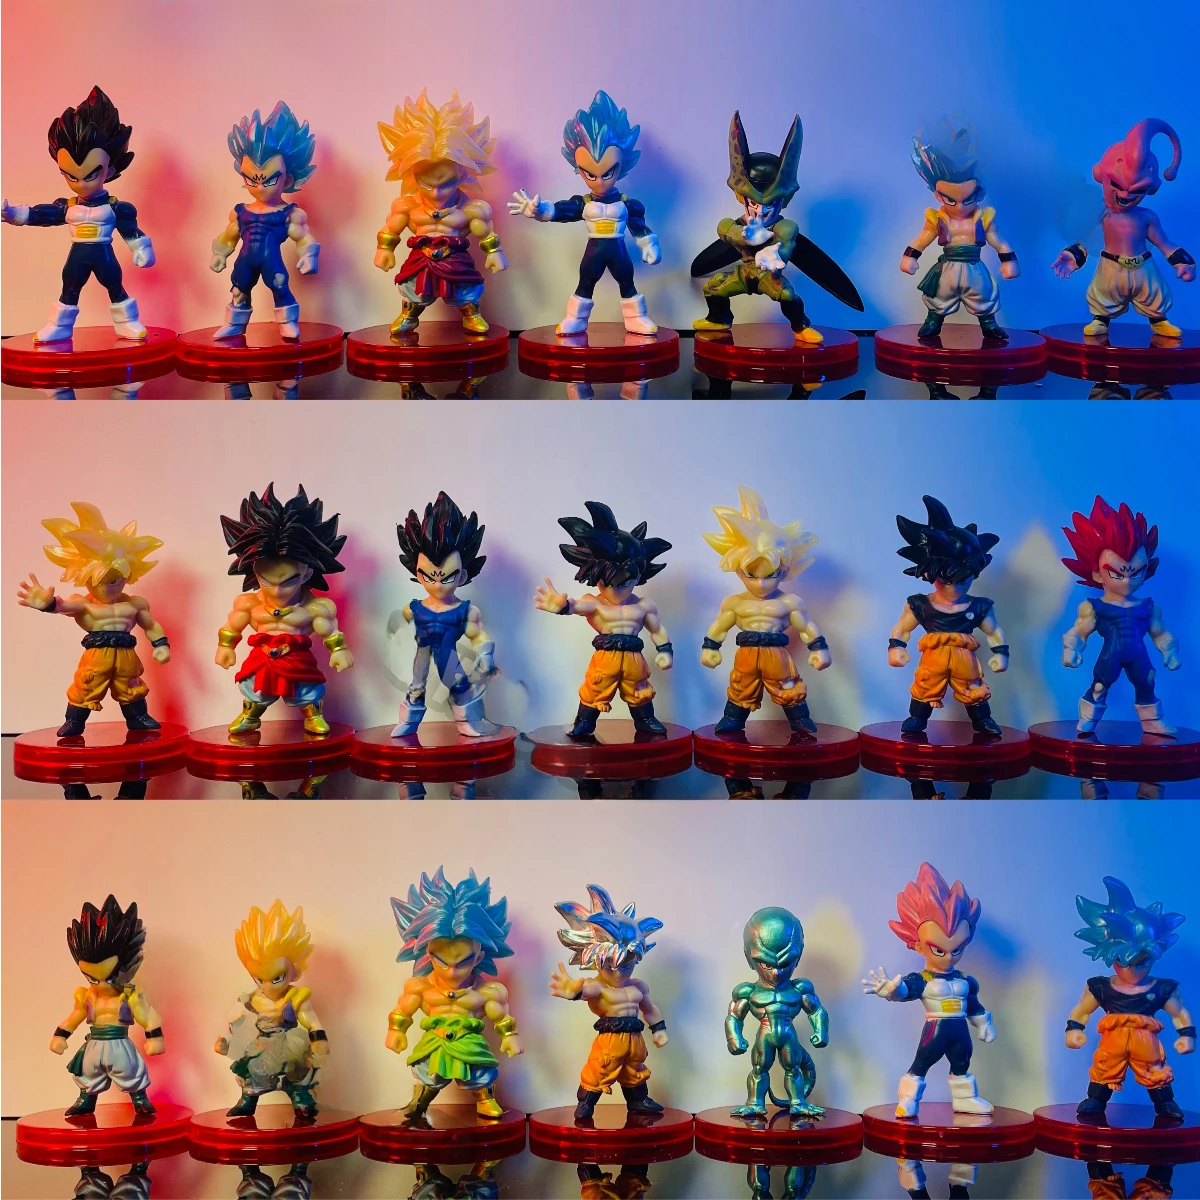 Dragon Ball Z Super Saiyan Son Goku Action Figure Set Collectible Anime Model Gifts for Fans